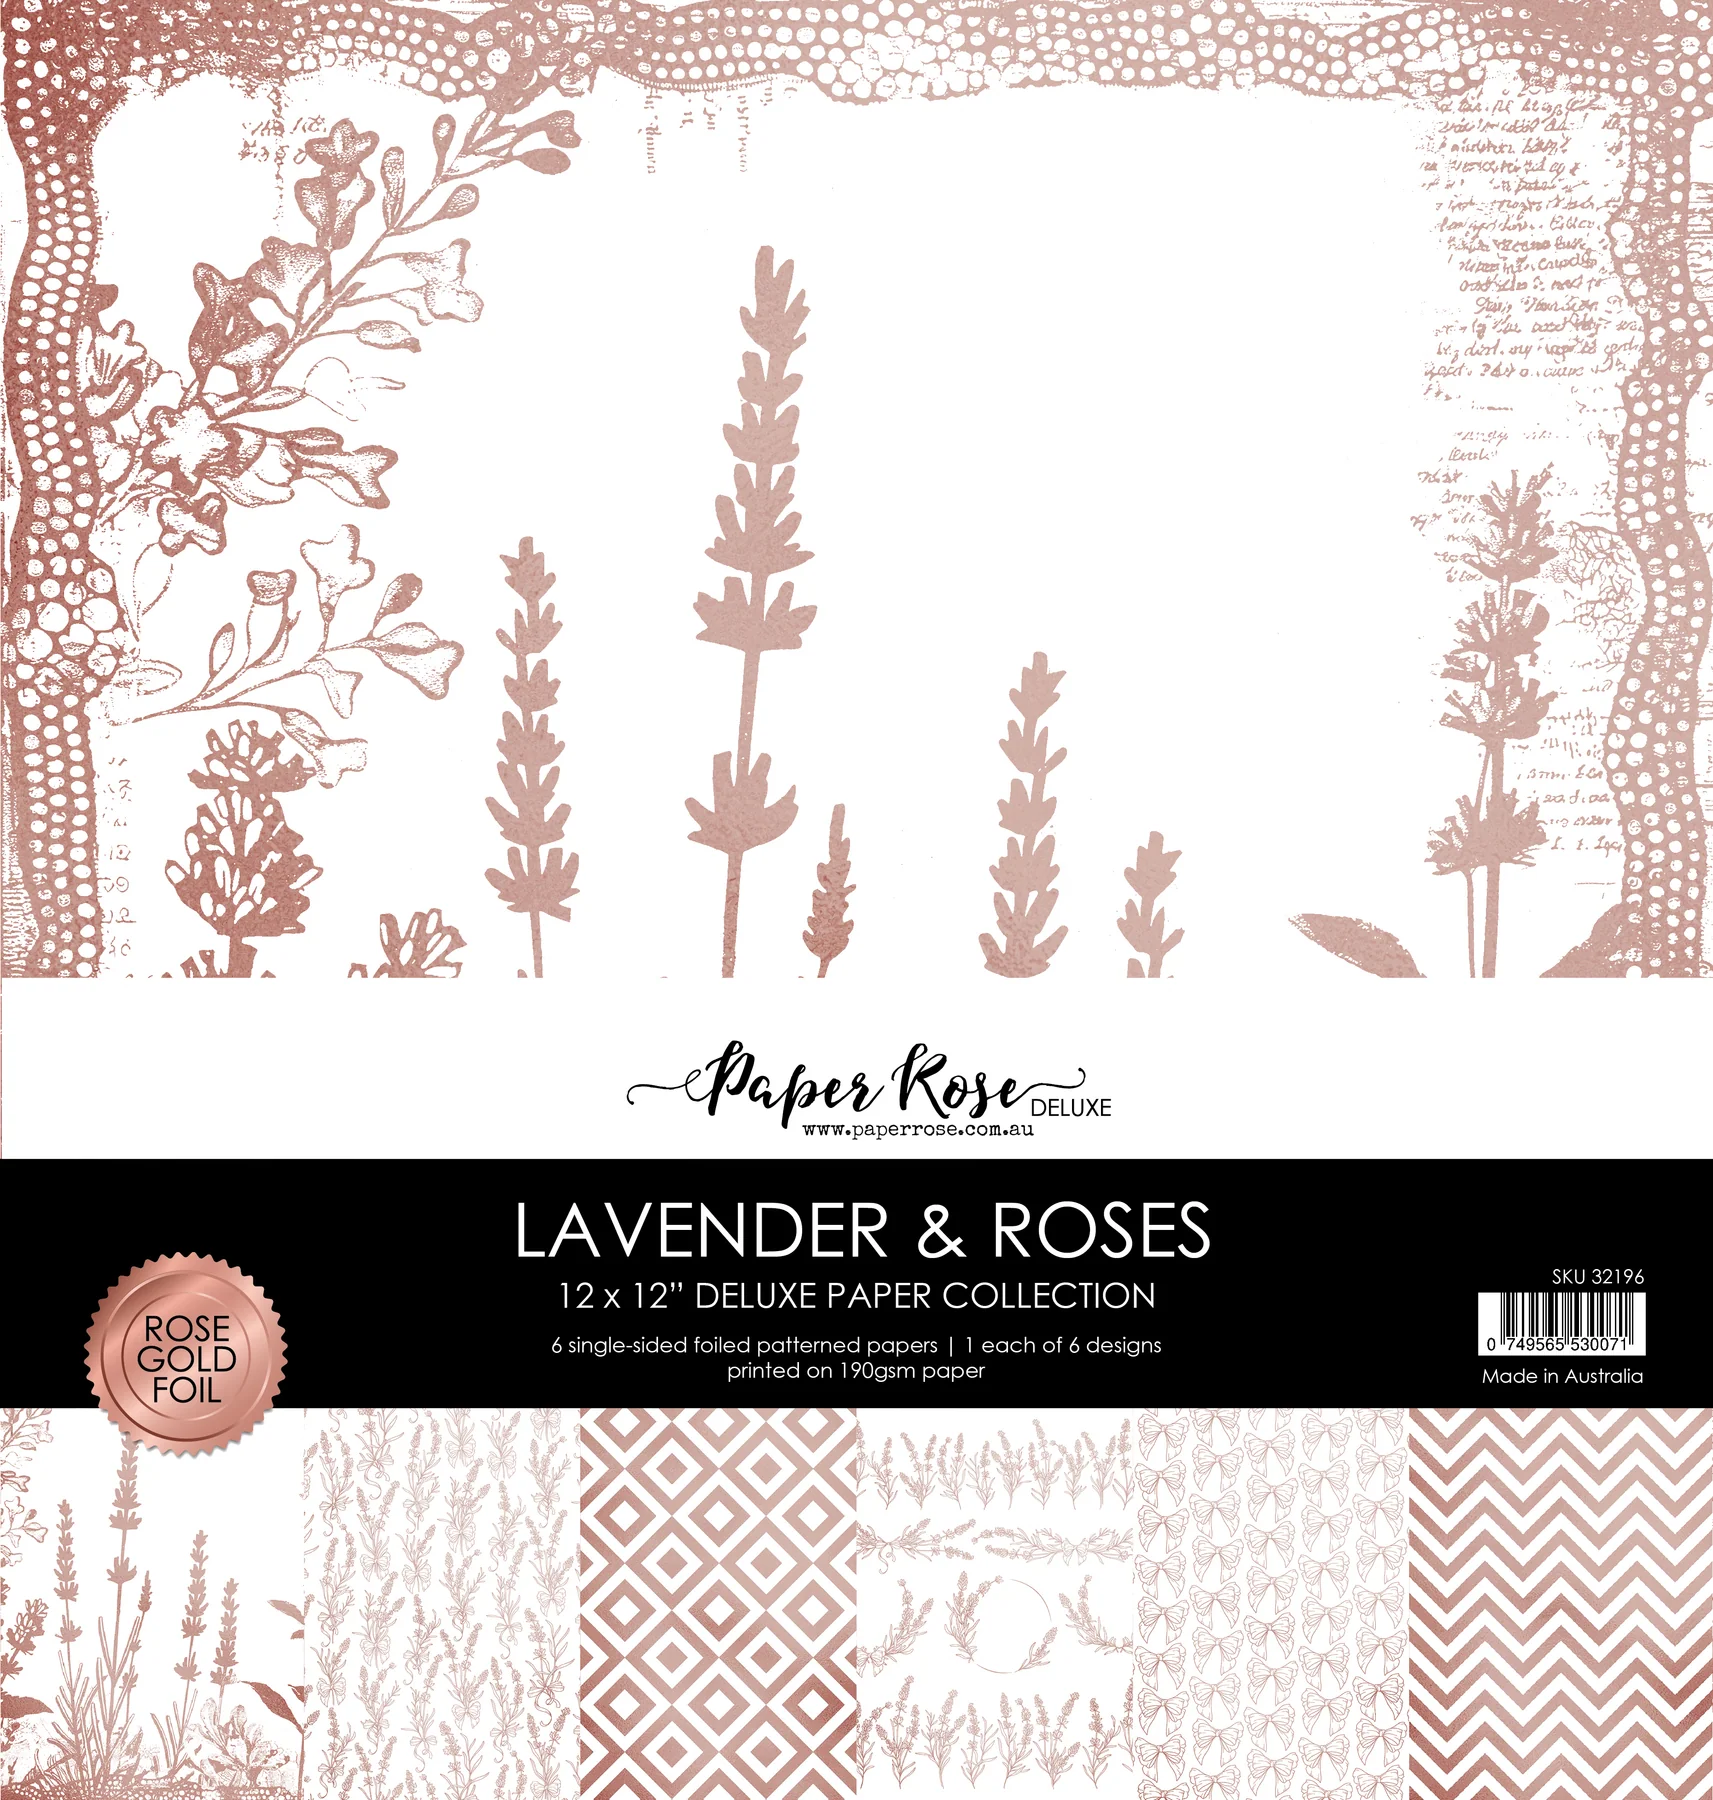 Lavender & Roses - Rose Gold Foil 12x12 Paper Collection 32196